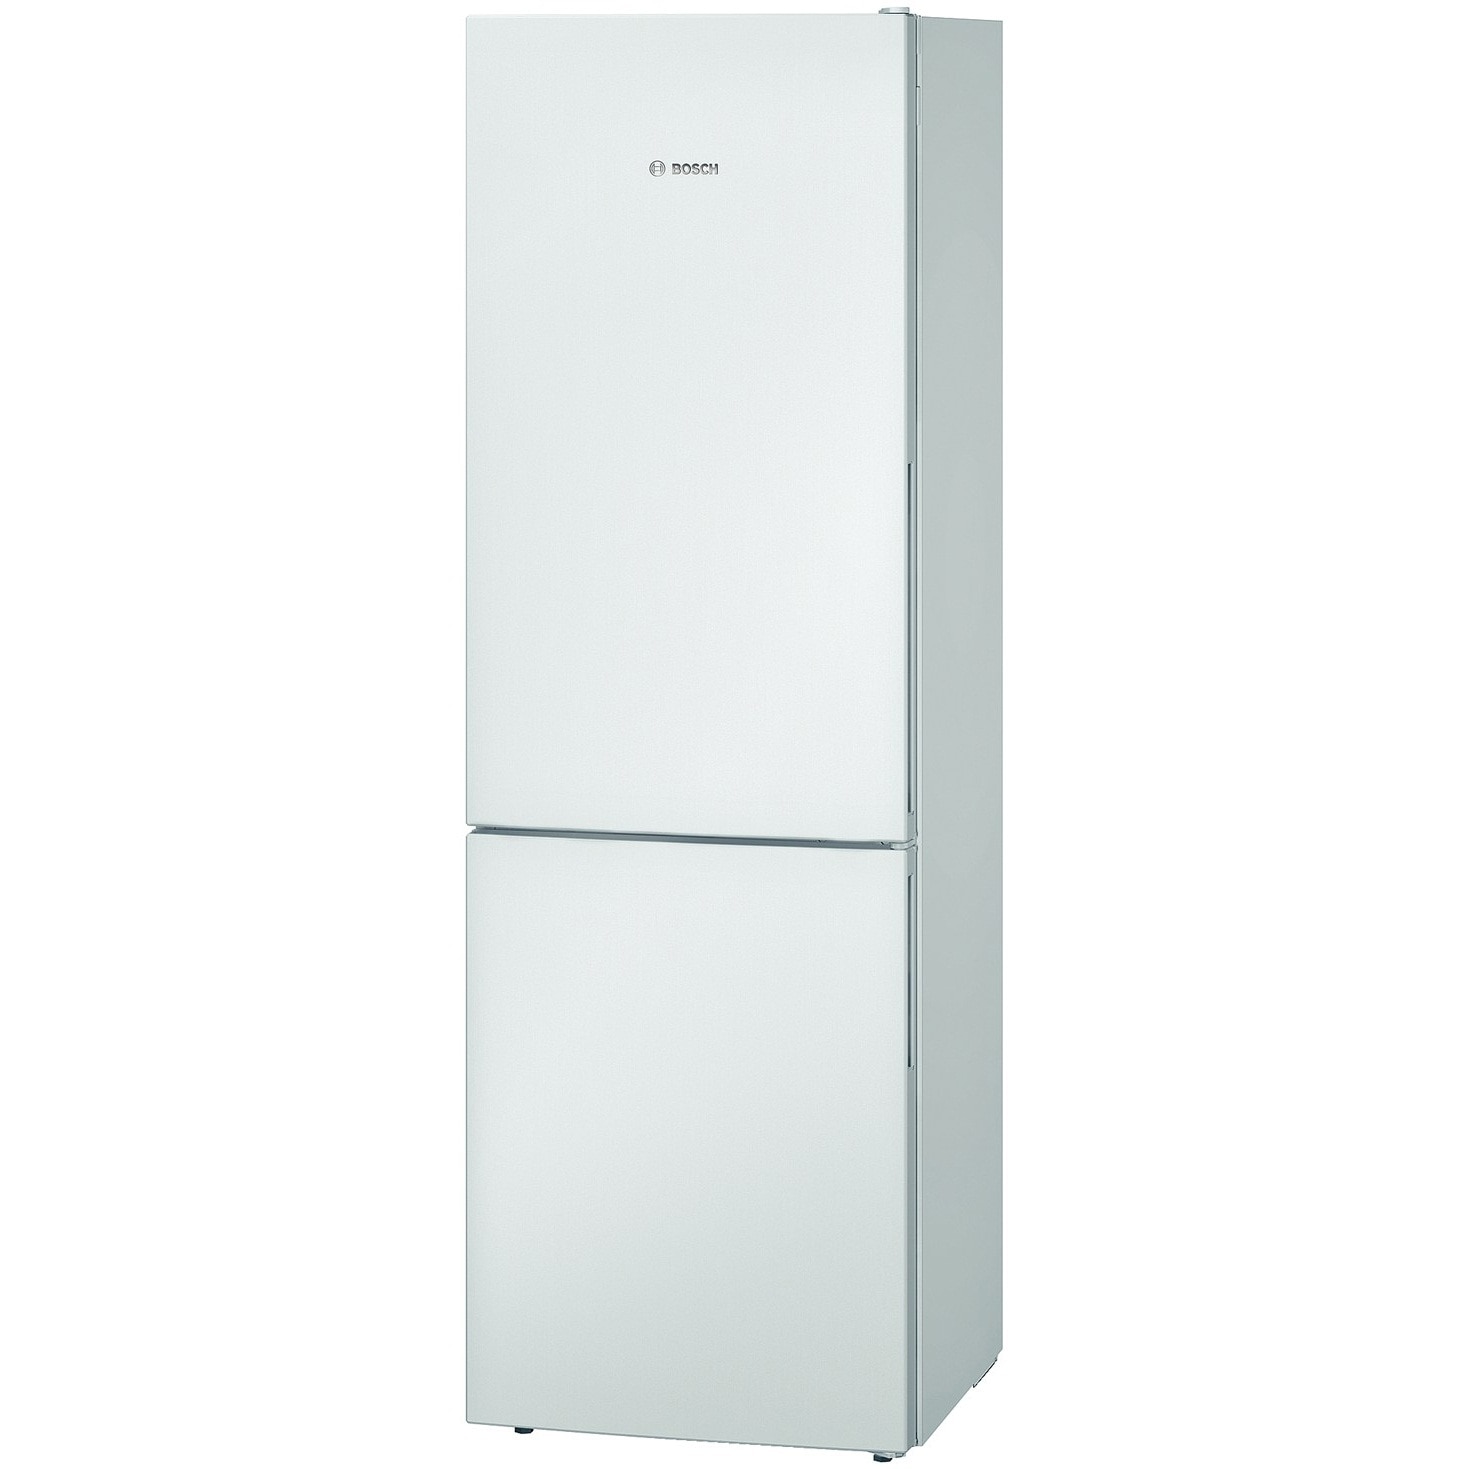 Хладилник Bosch KGV36VW32 с обем от 309 л.